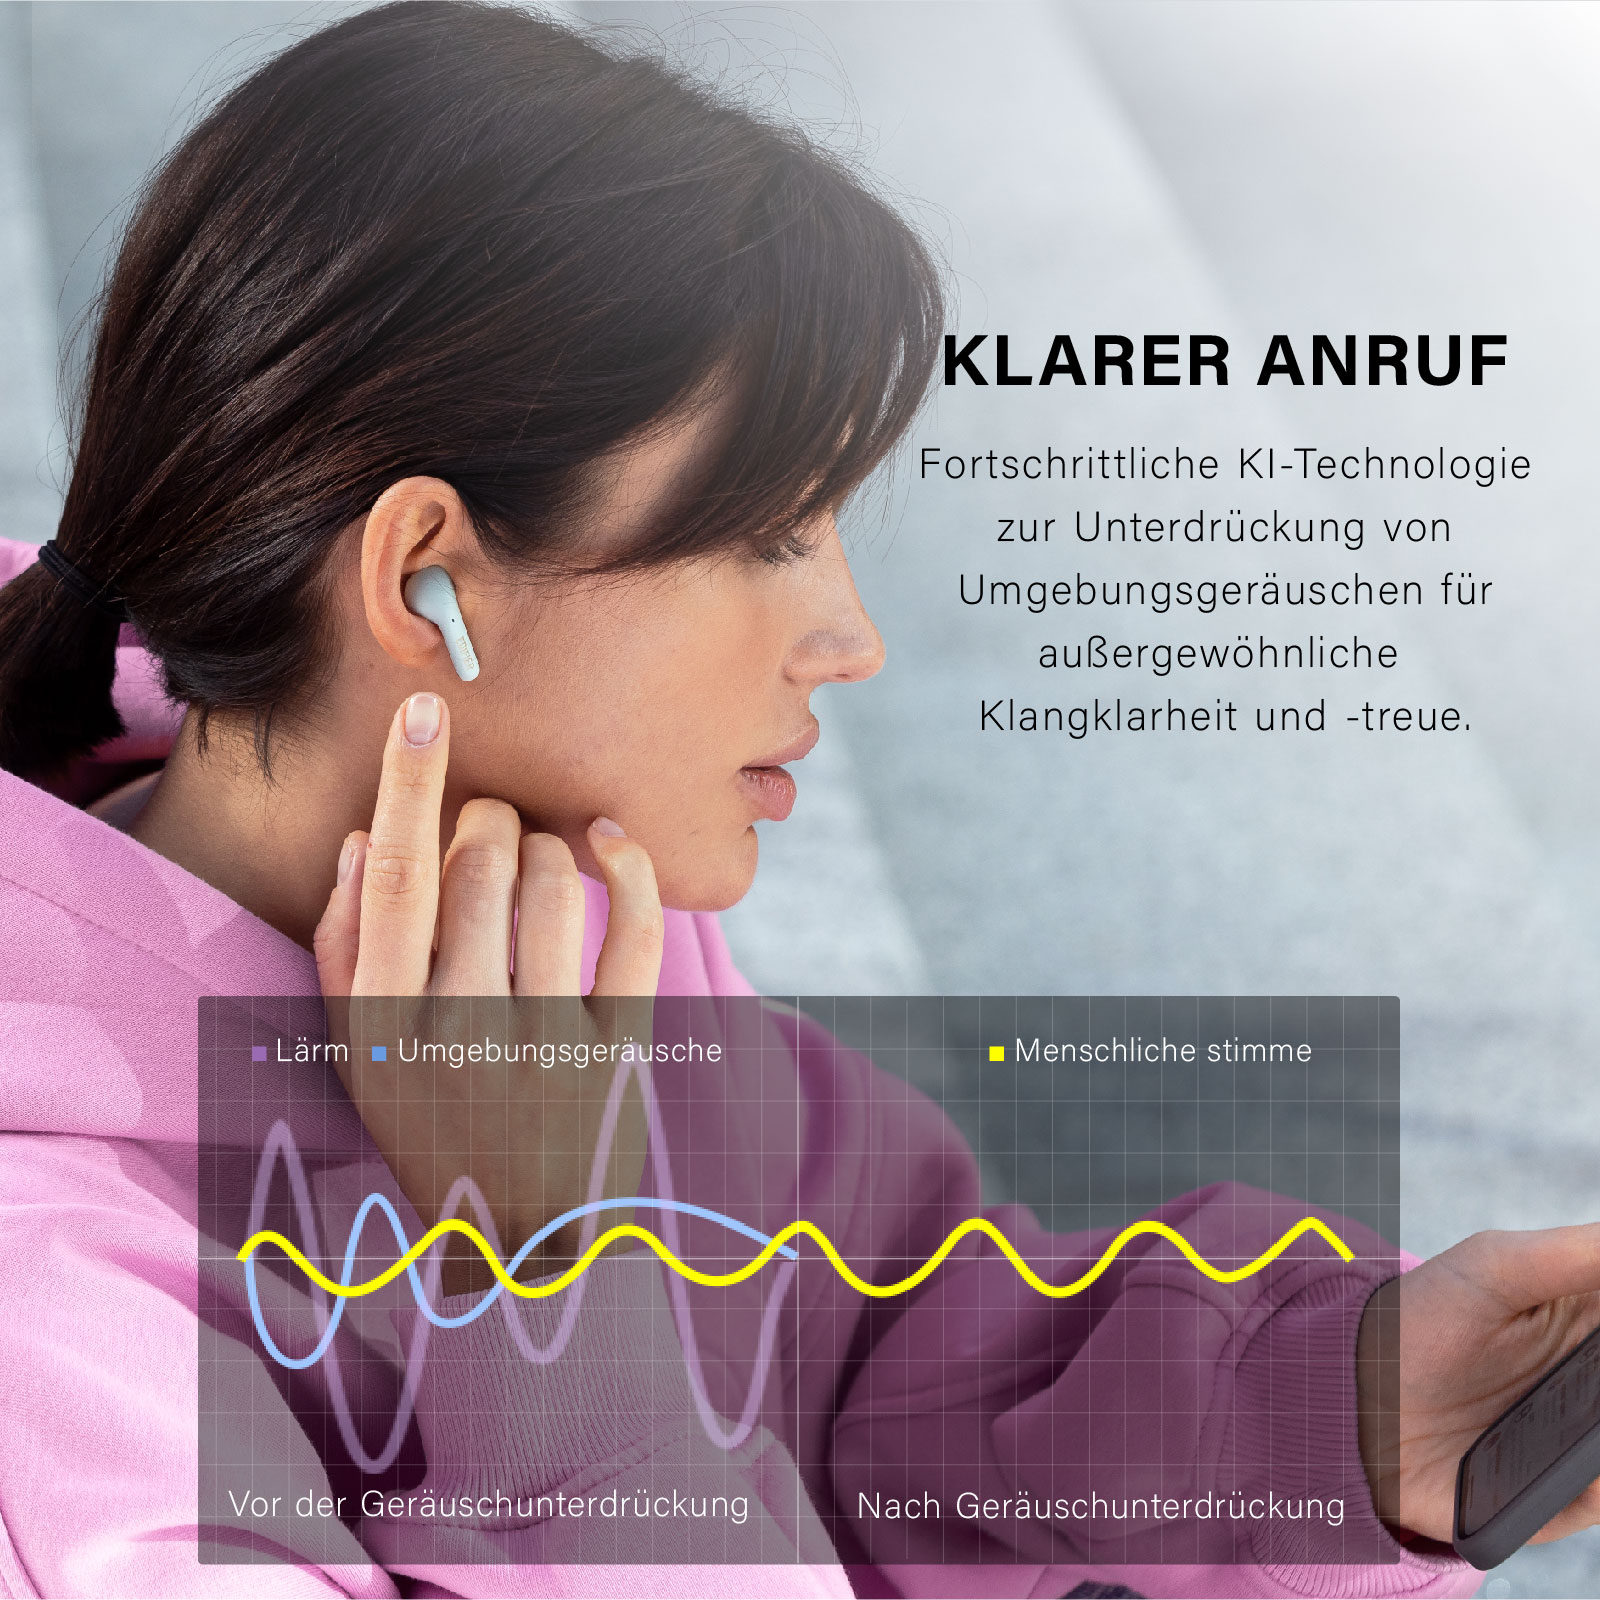 Grün Bluetooth EDIFIER X2s, In-ear Bluetooth-Kopfhörer